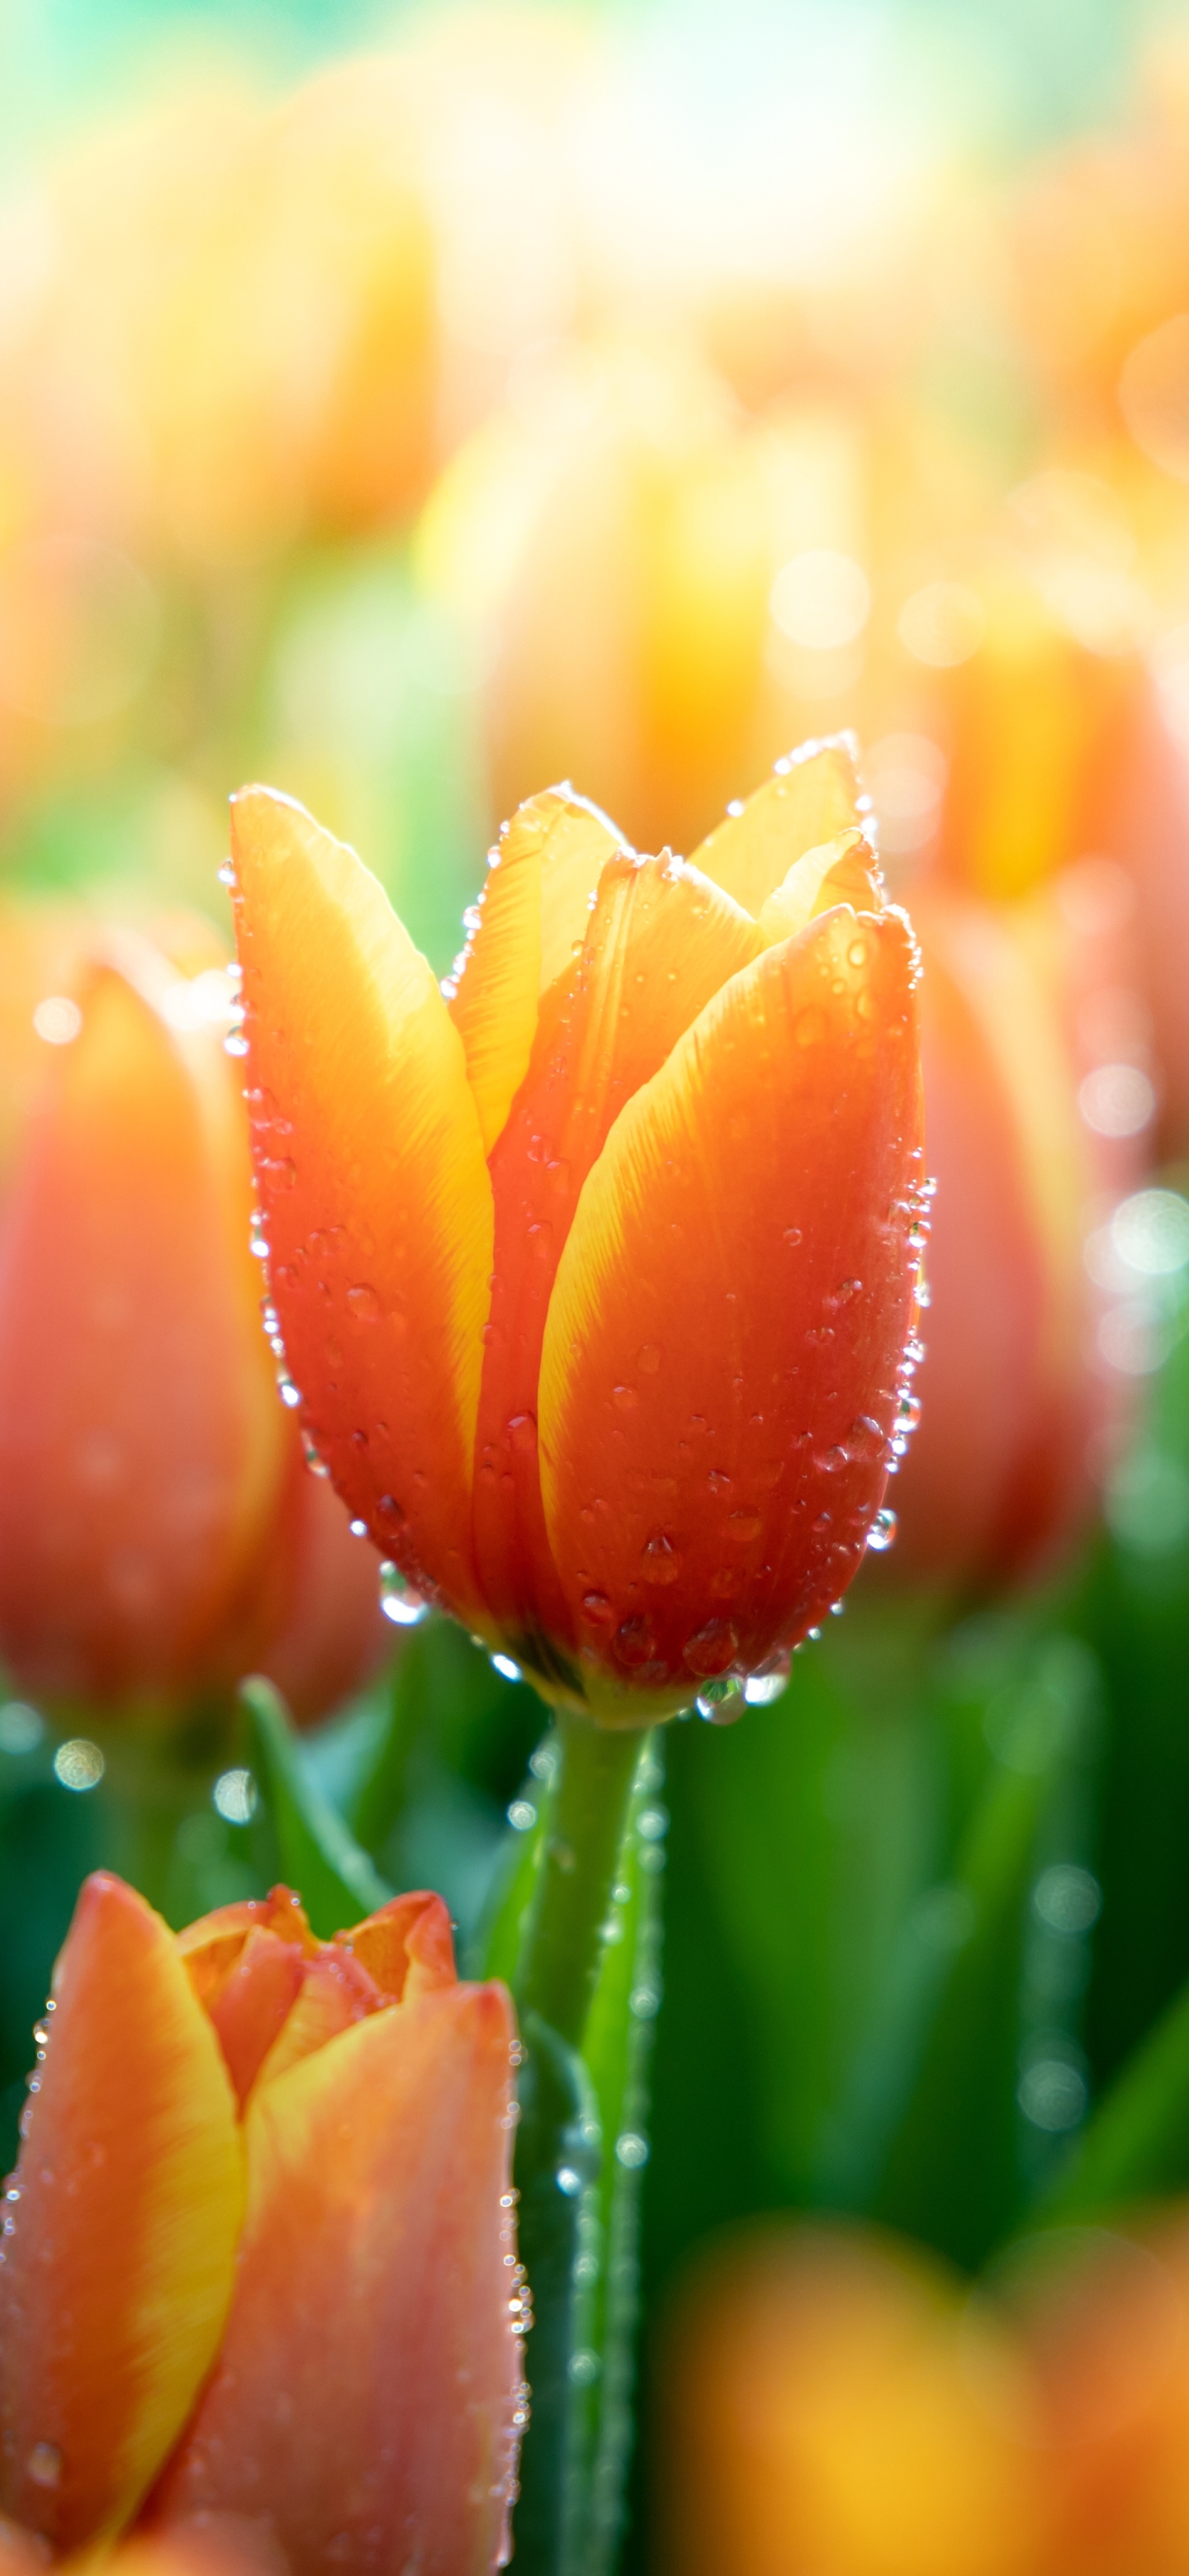 1164583 descargar imagen tierra/naturaleza, tulipán, naturaleza, flor naranja, macro, macrofotografía, flores: fondos de pantalla y protectores de pantalla gratis